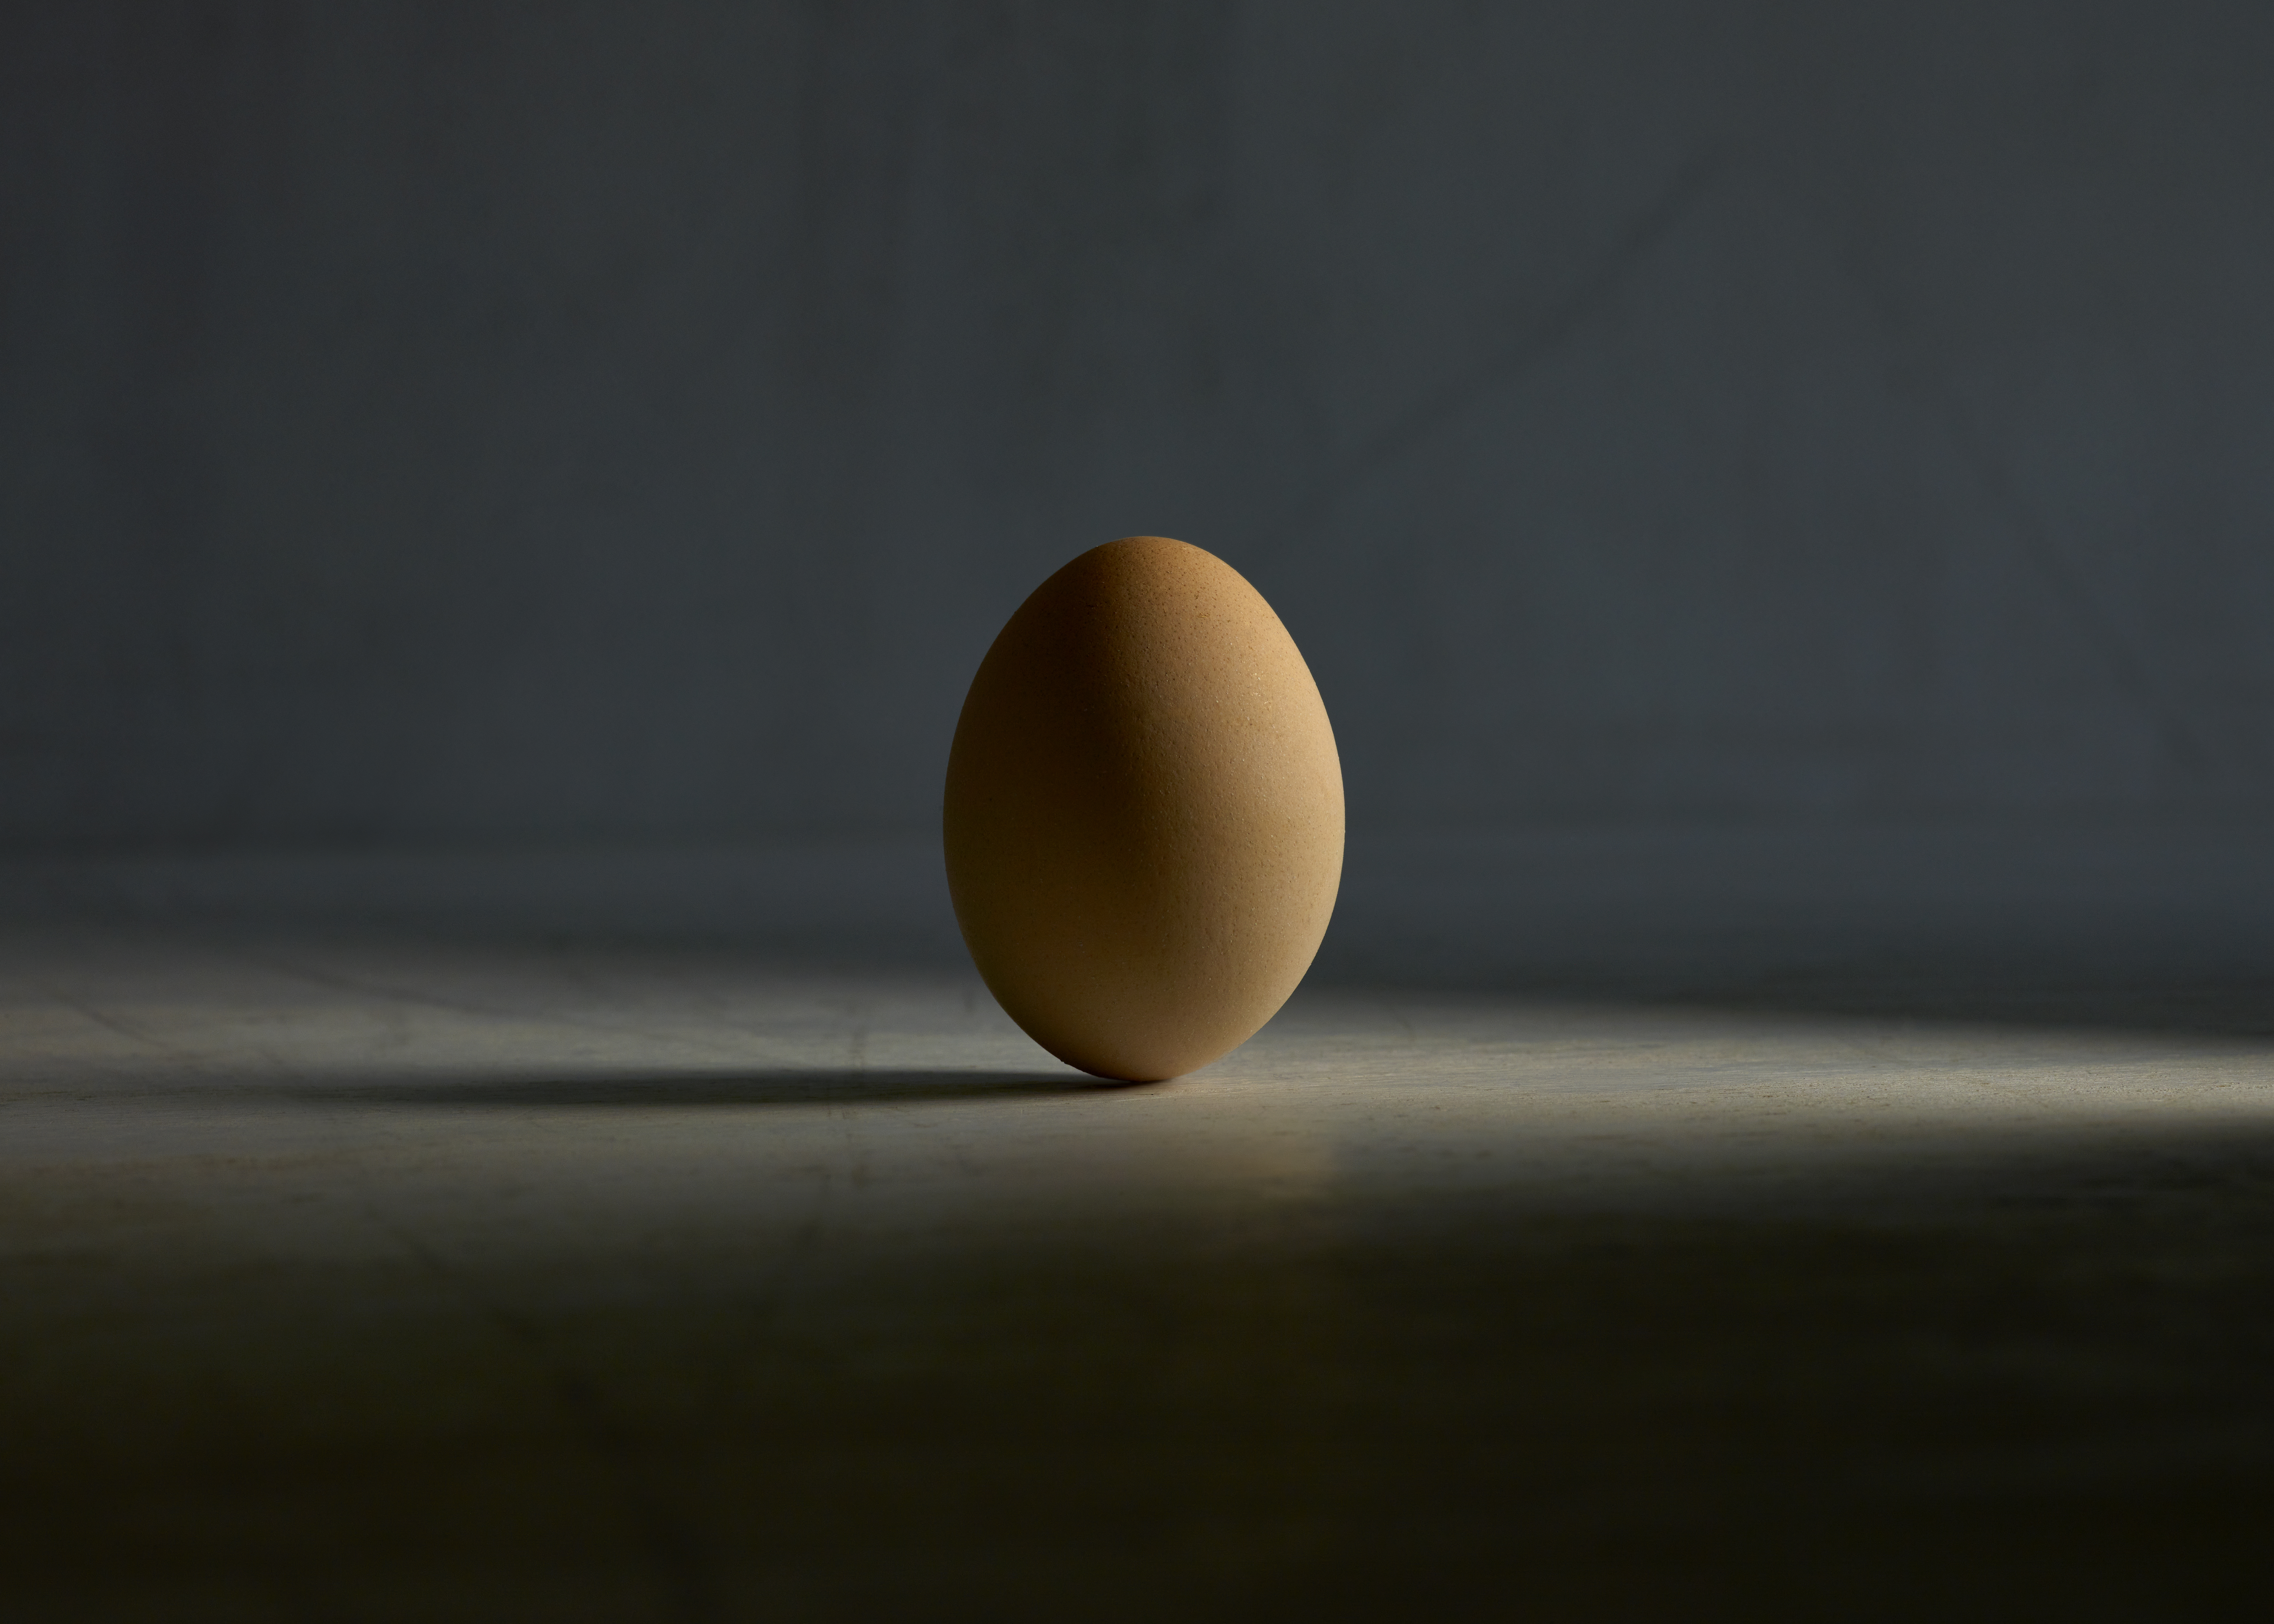 The Egg 222